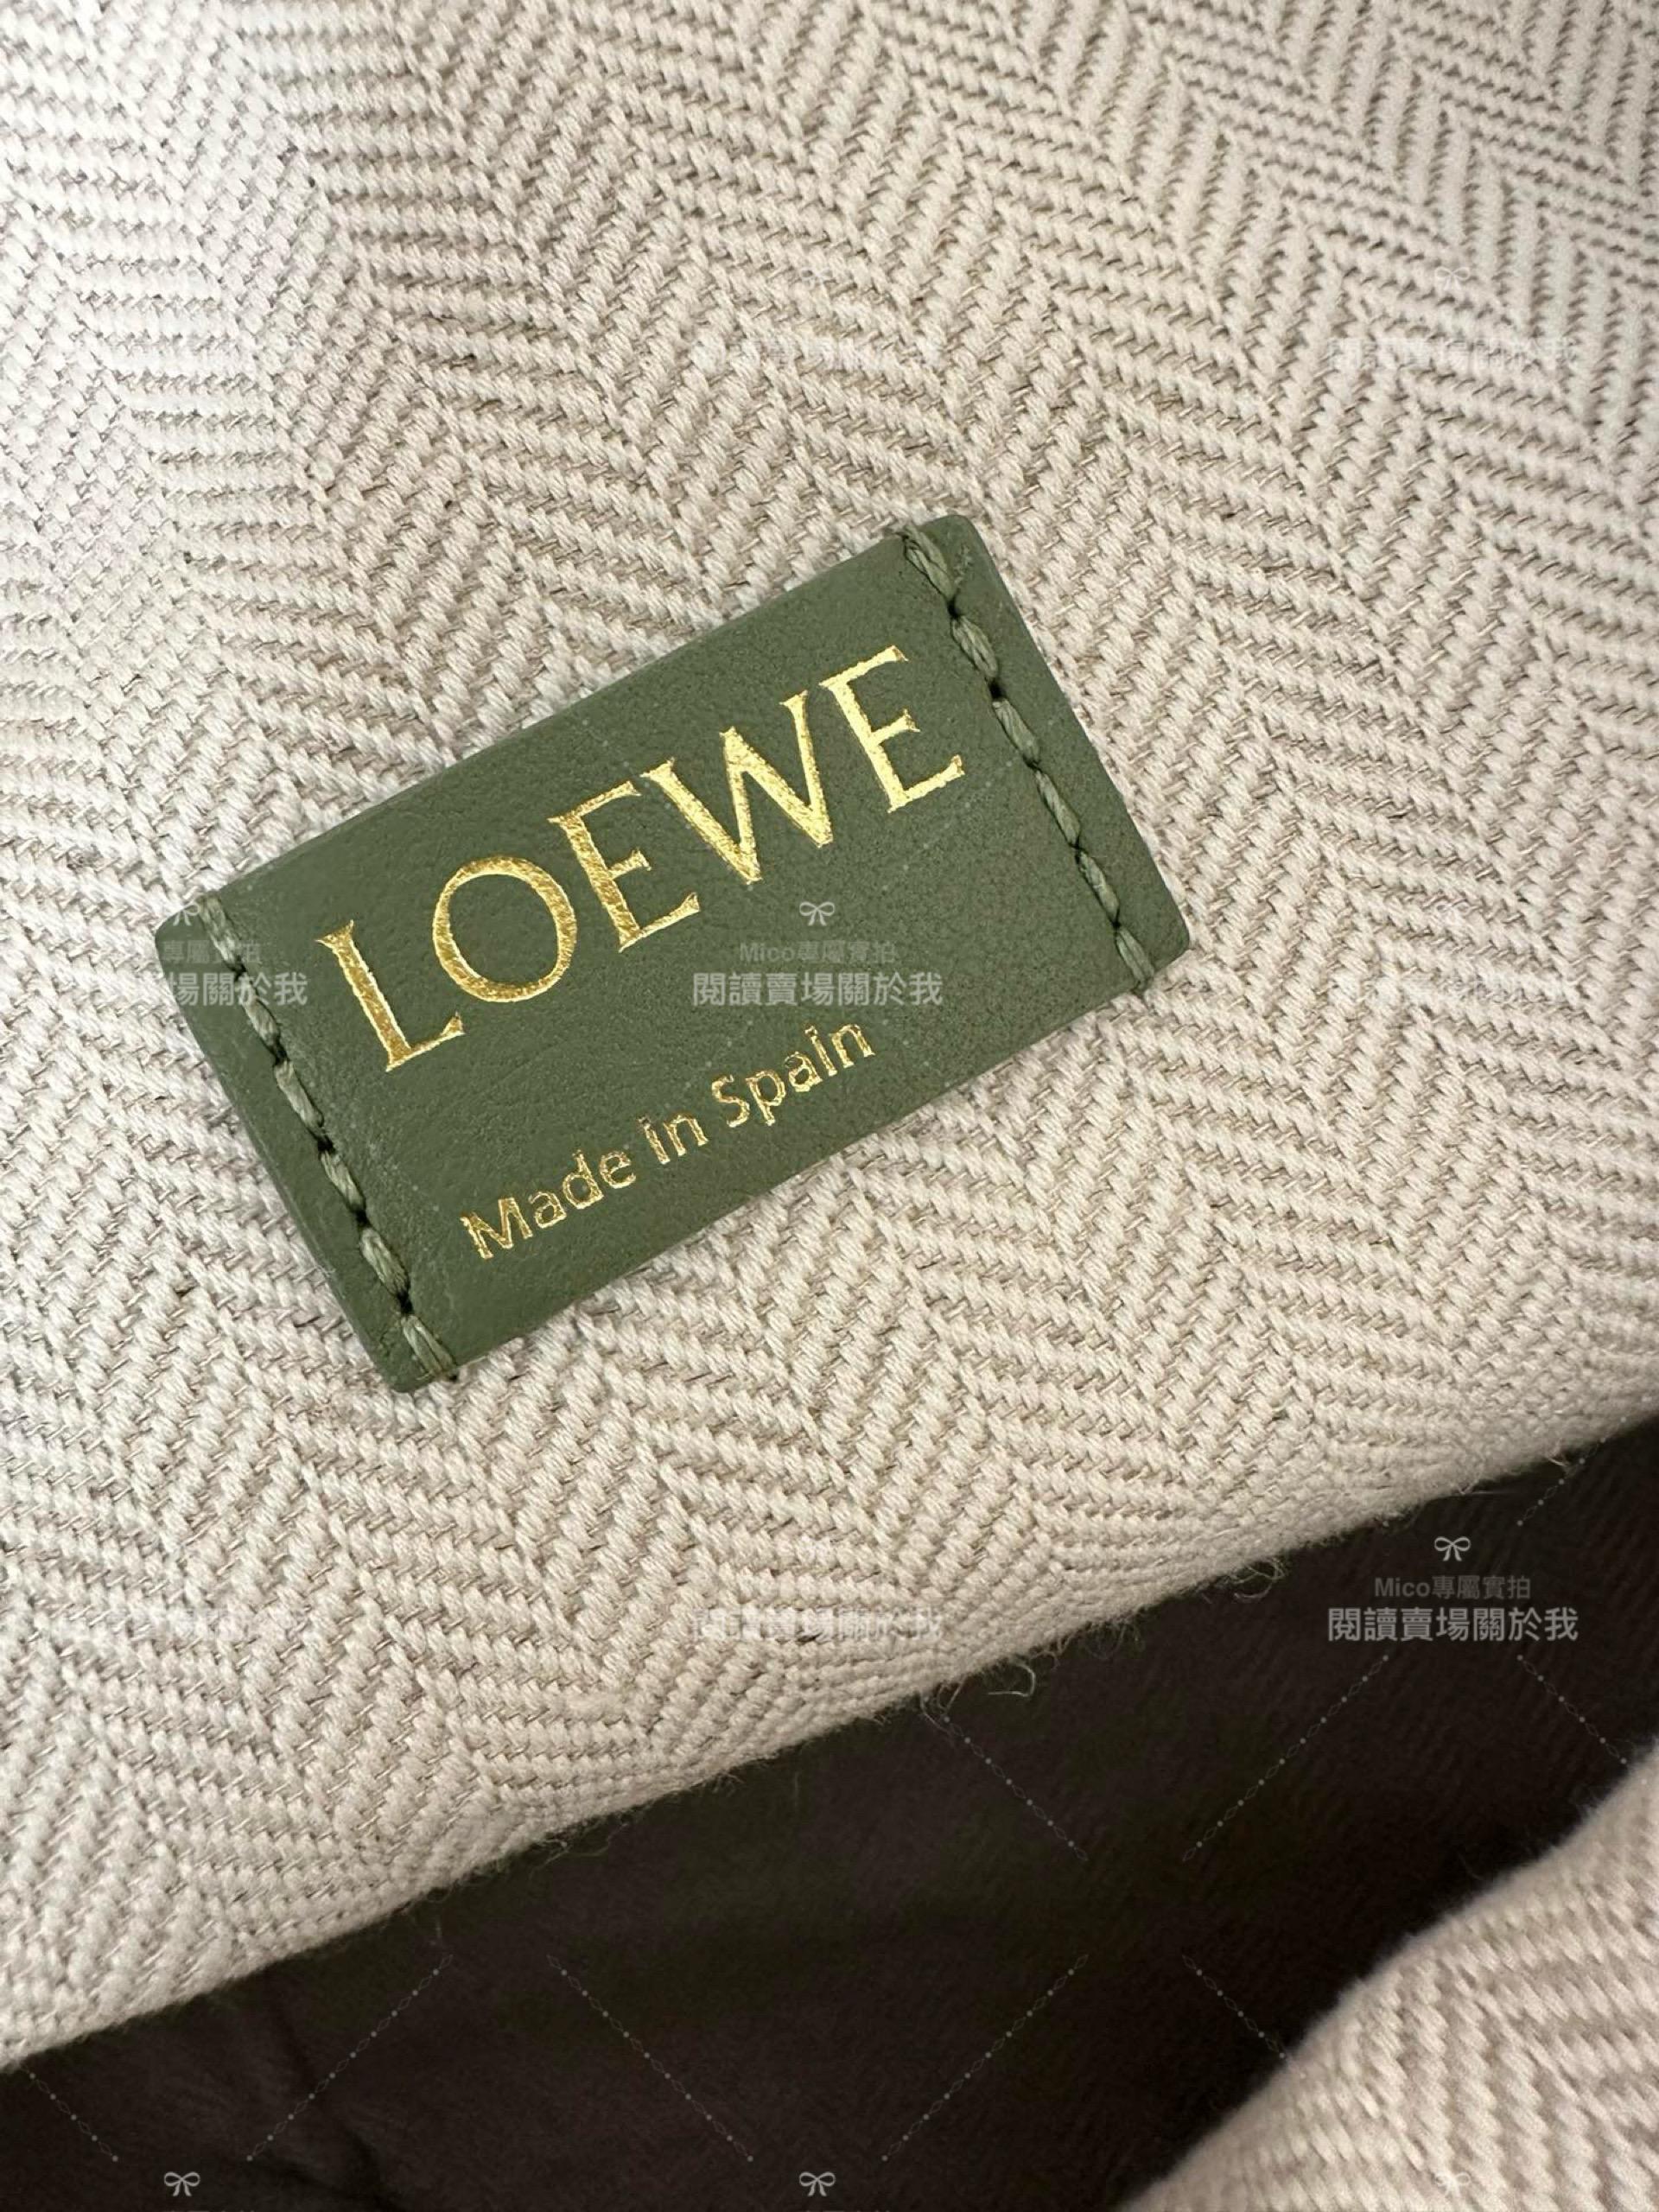 Loewe 牛油果綠 Anagram Cubi 飯盒包/腋下包 大號/35cm 帆布包 Anagram提花布和牛皮革